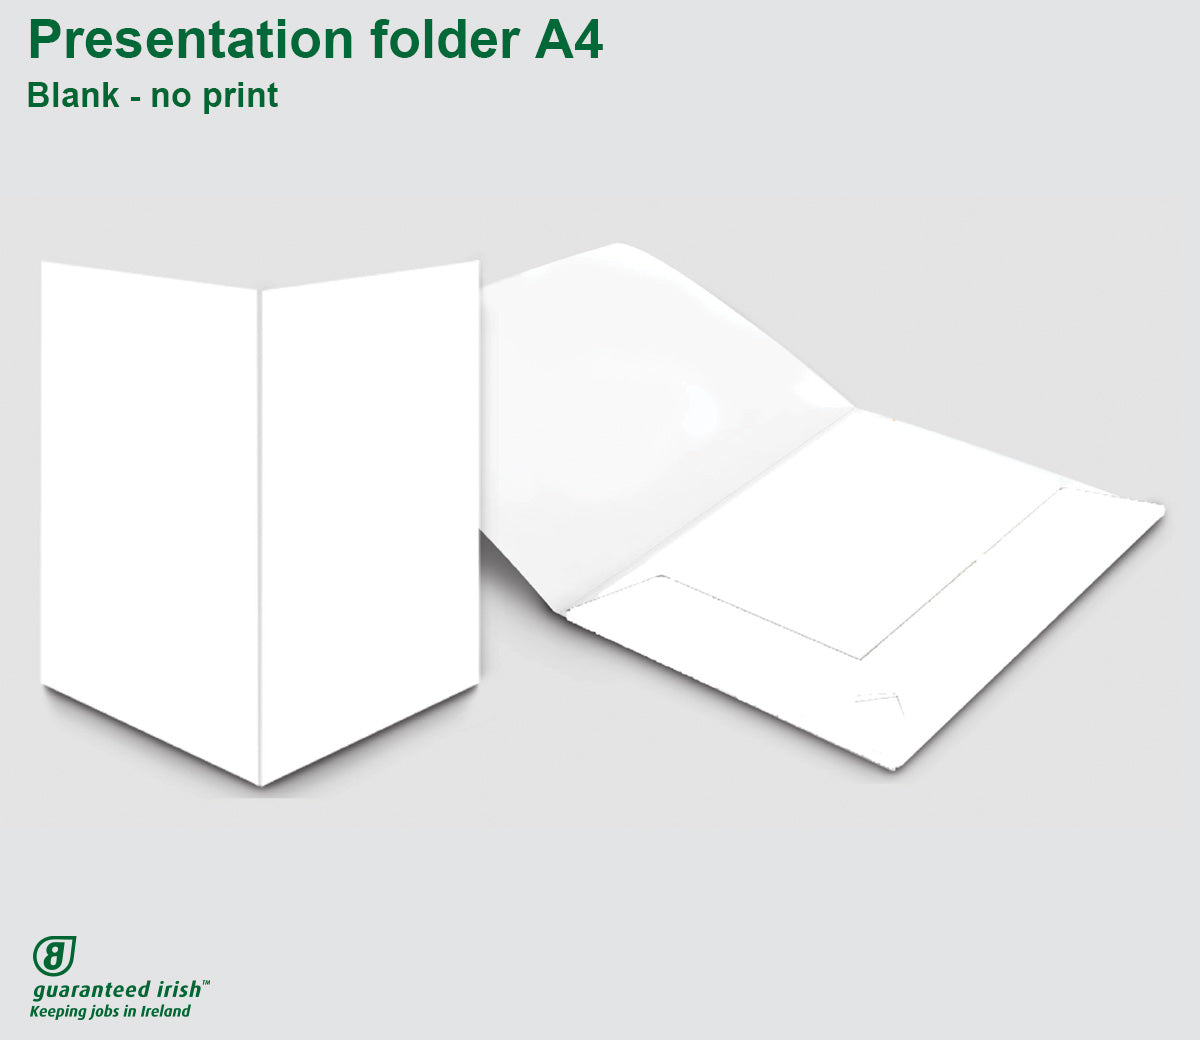 Presentation folder A4 - Blank - no print